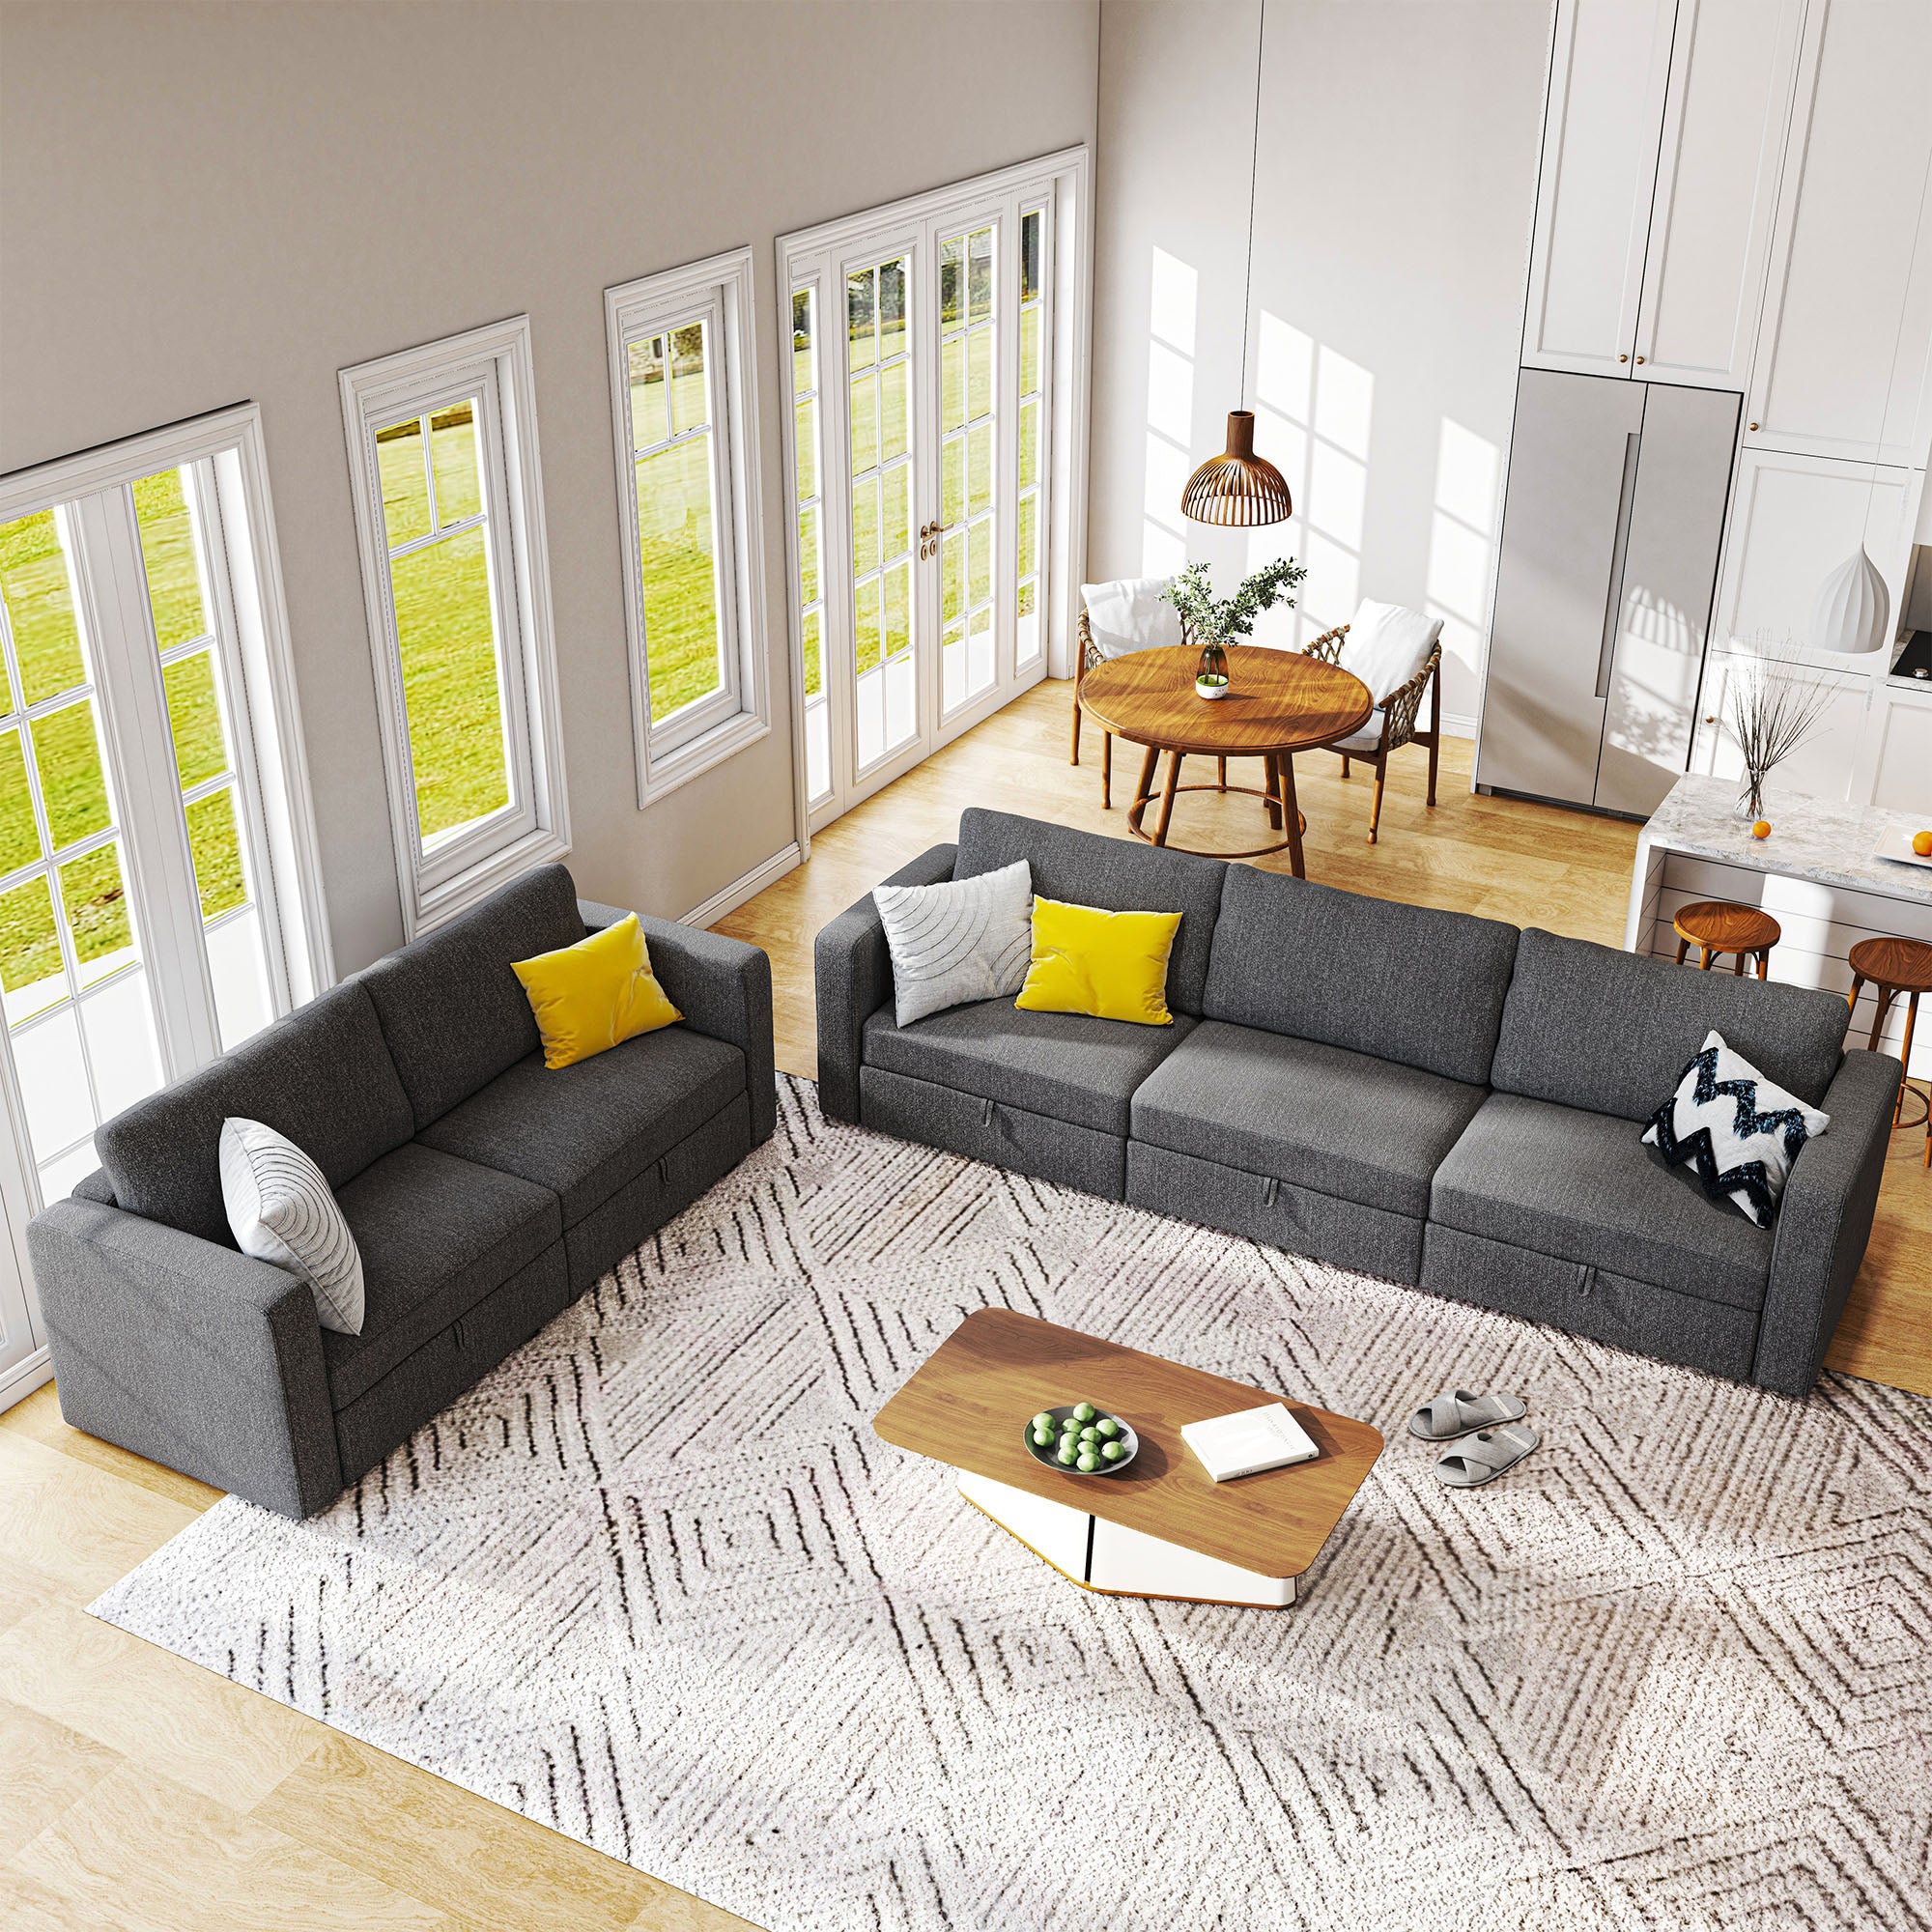 HONBAY Dark Grey Polyester Modular 2+3 Living Room Sofa Set wit Storage Space